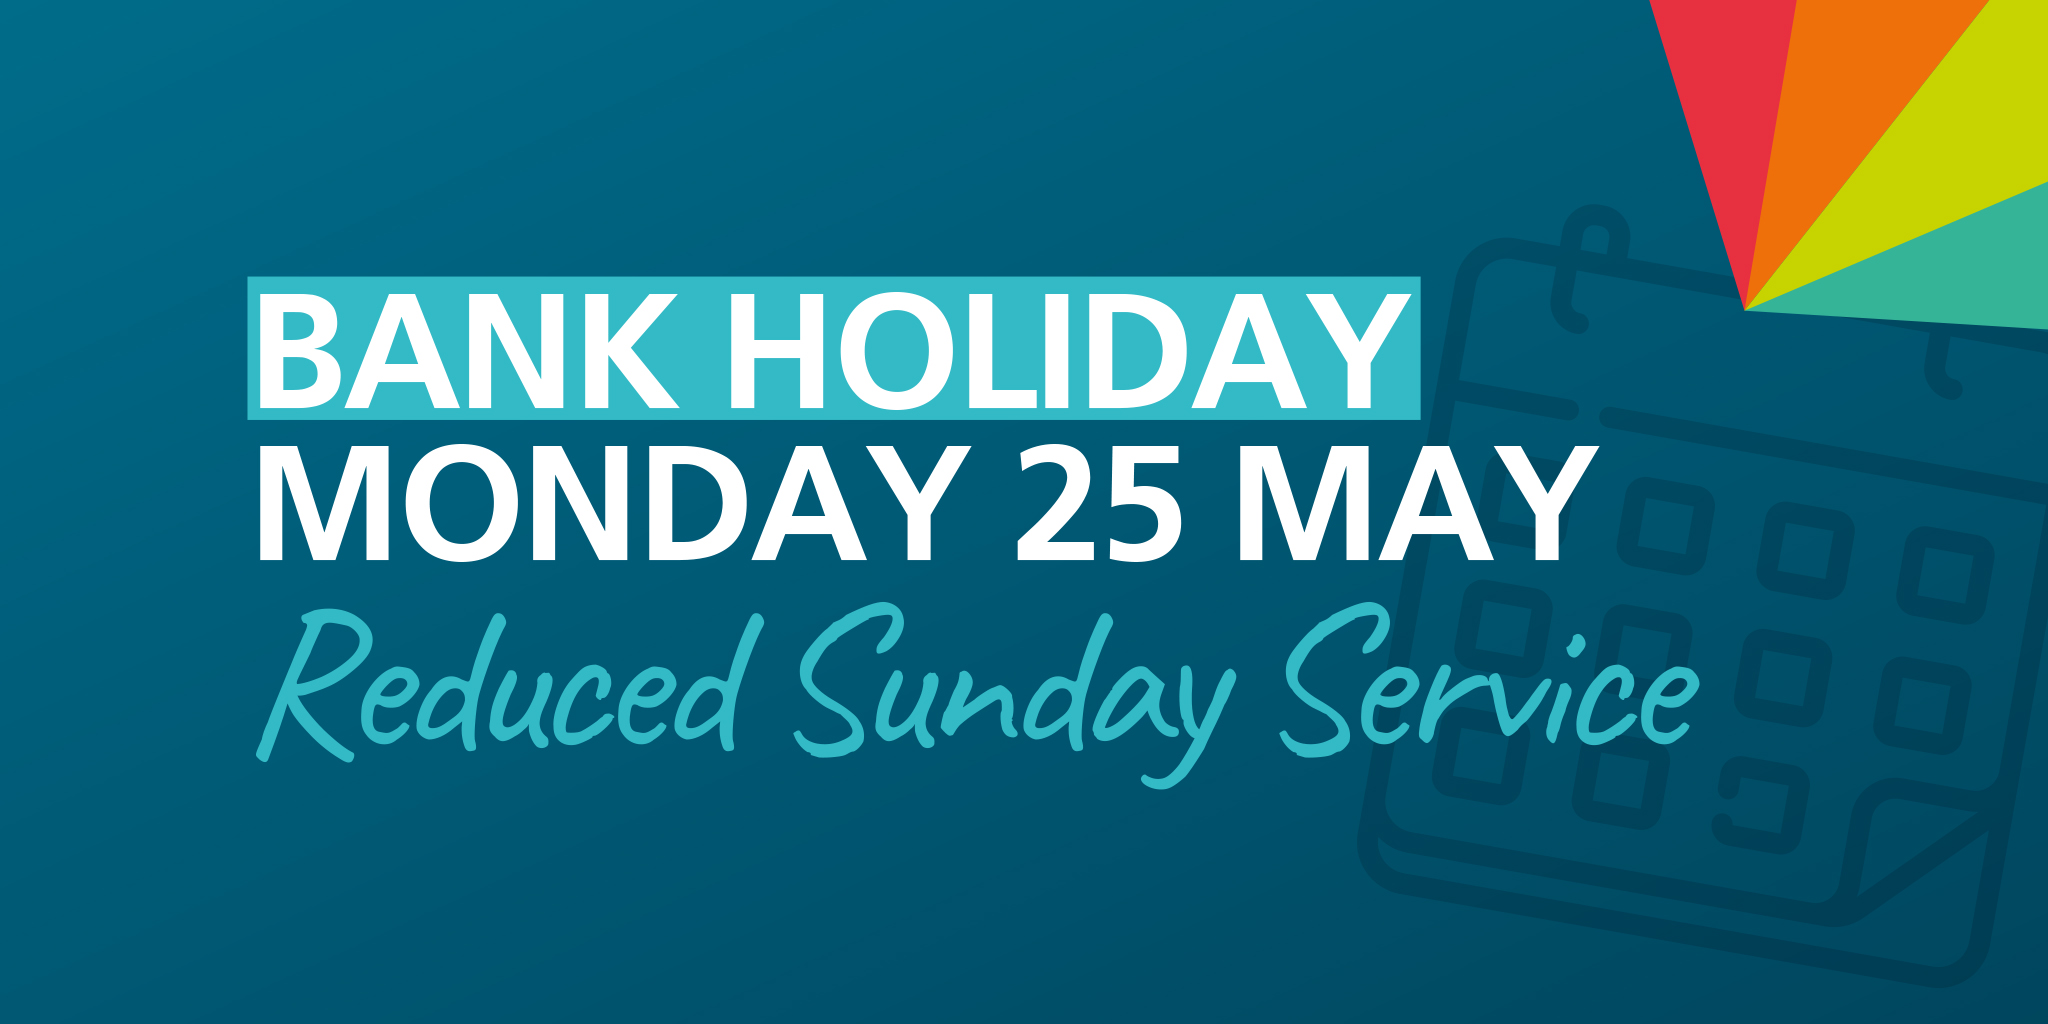 Bank Holiday Running Times Monday 25th May Unilink Buses